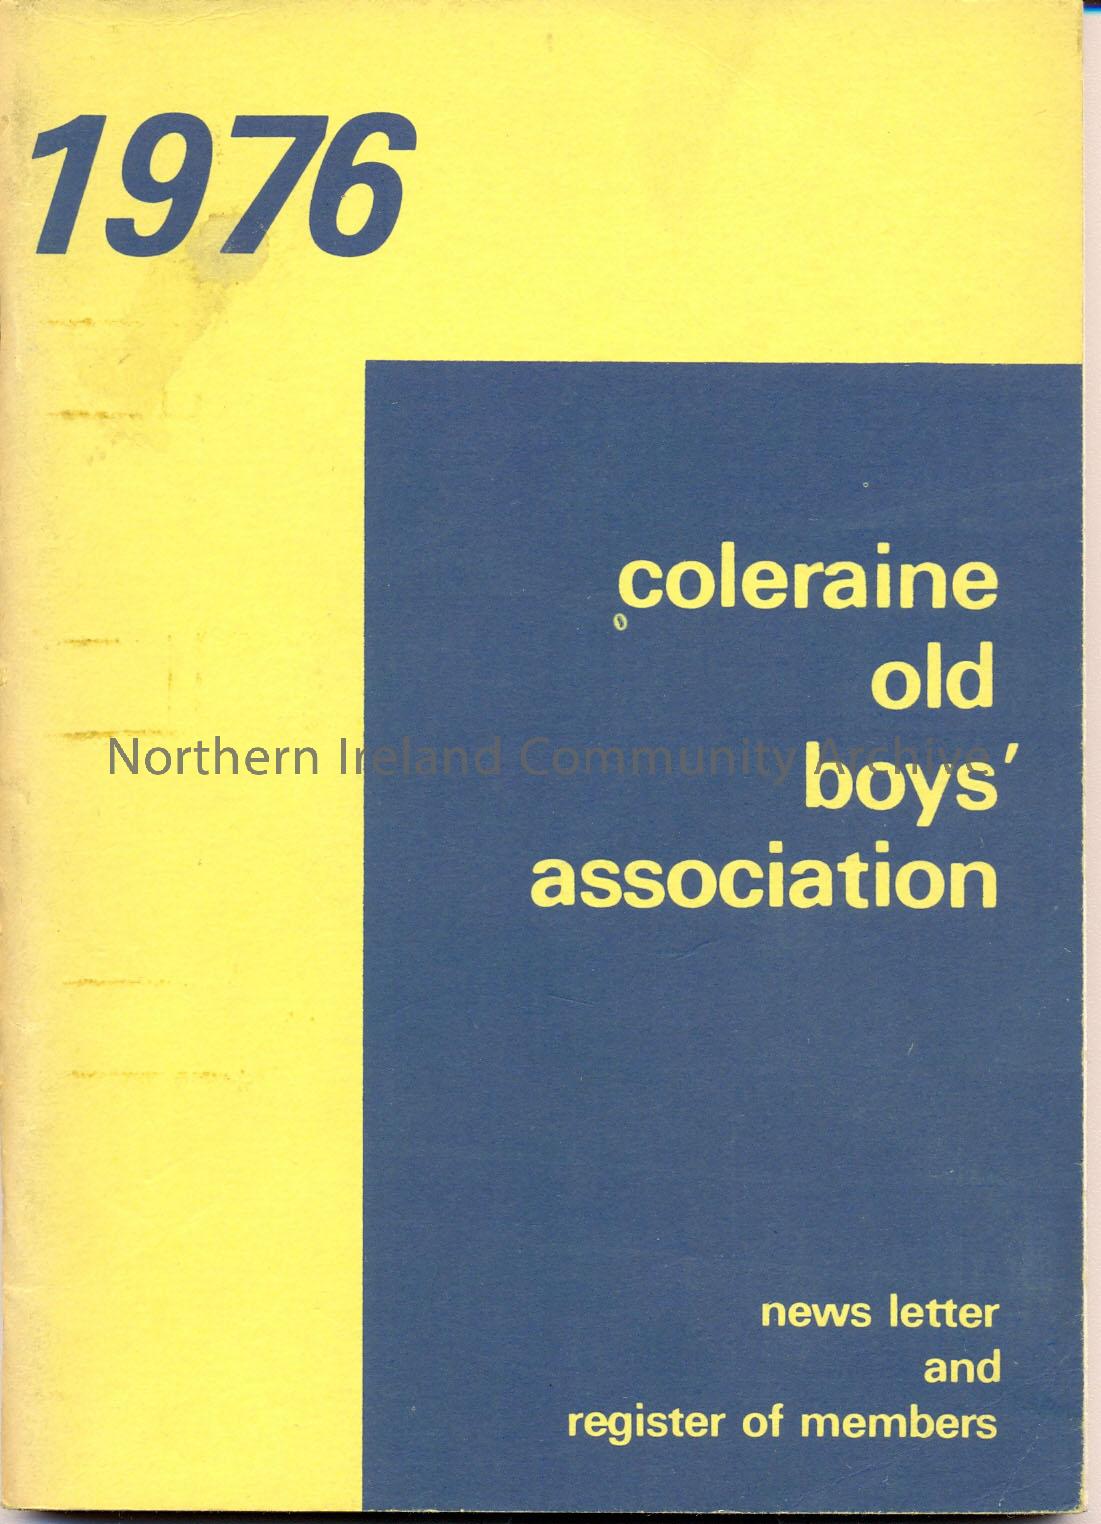 Colerain Old Boys Association